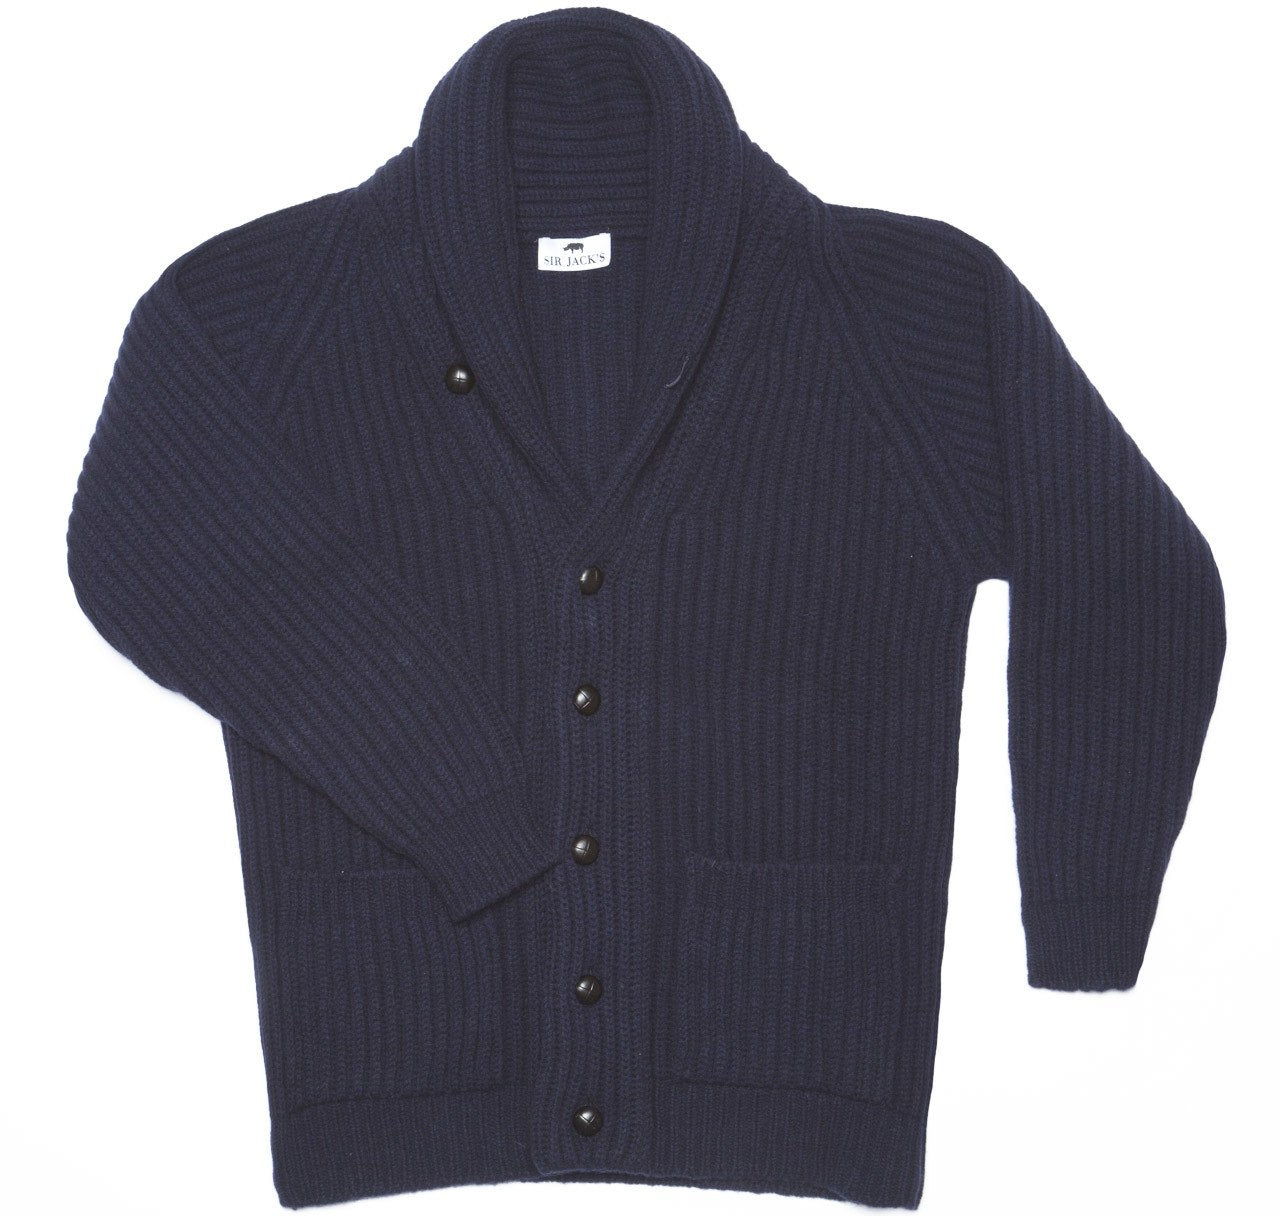 Highland Navy Shawl Cardigan Sweater